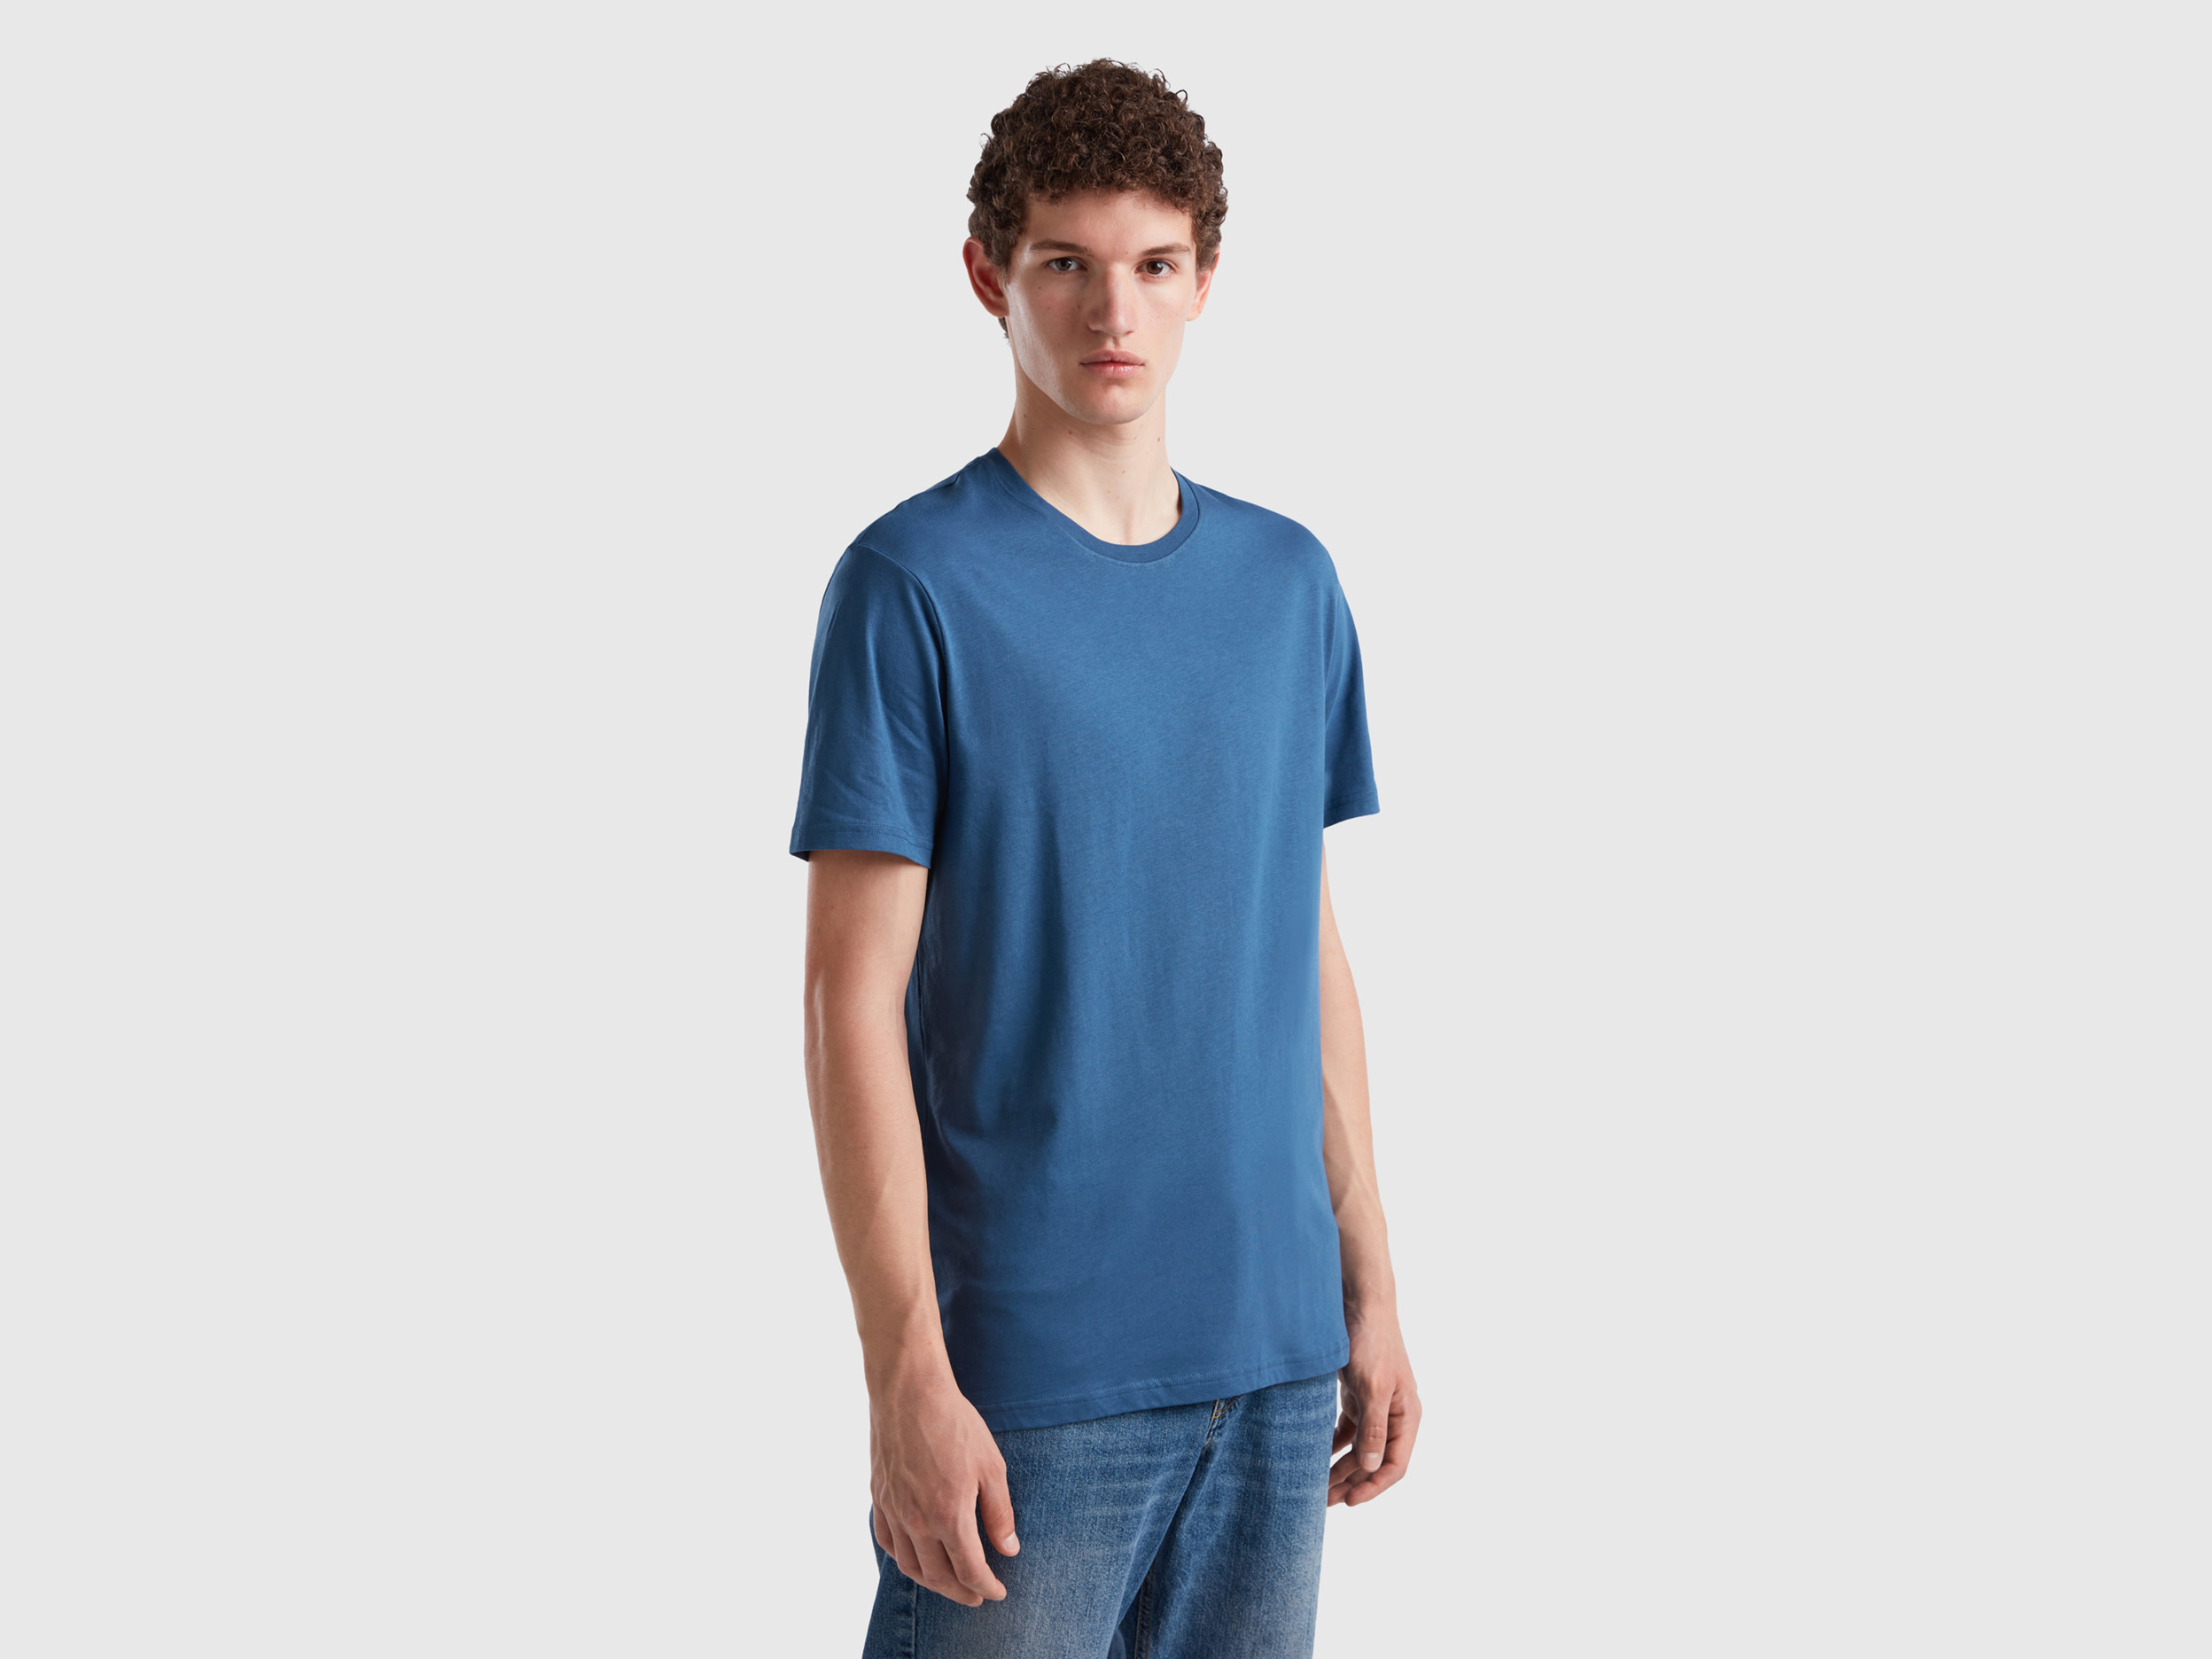 Benetton, Air Force Blue T-shirt, size M, Air Force Blue, Men